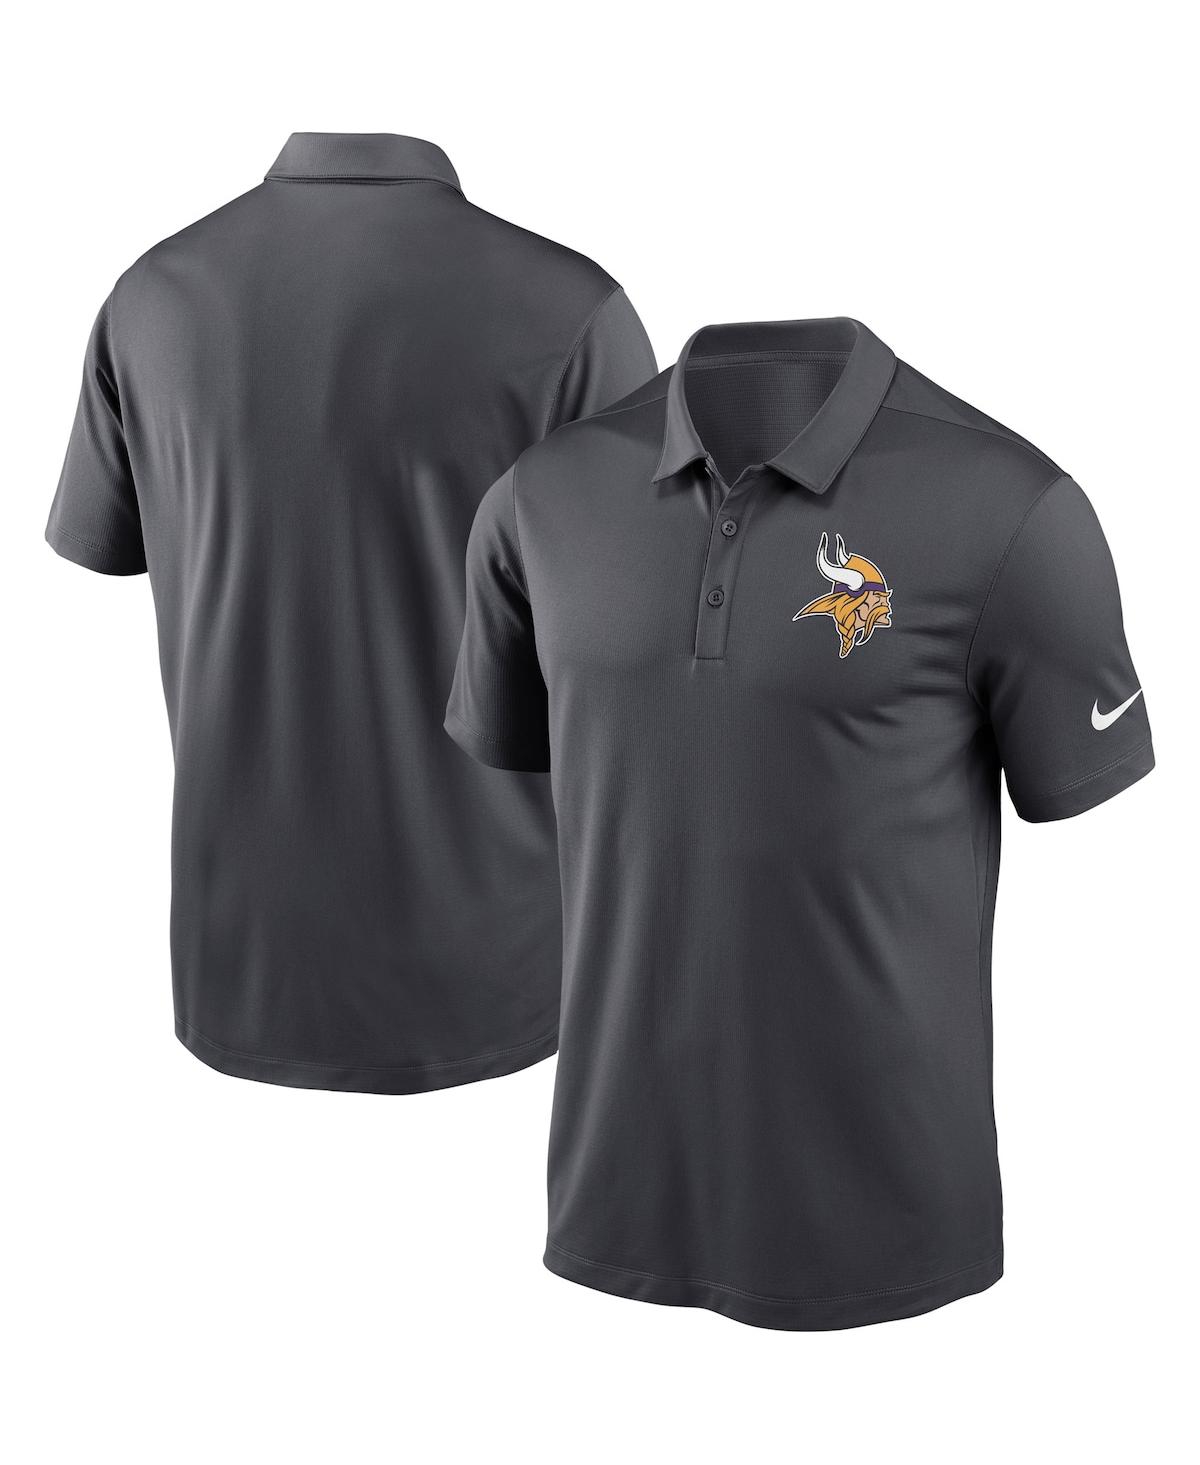 Men's Nike Charcoal Minnesota Vikings Franchise Performance Polo Shirt - Charcoal